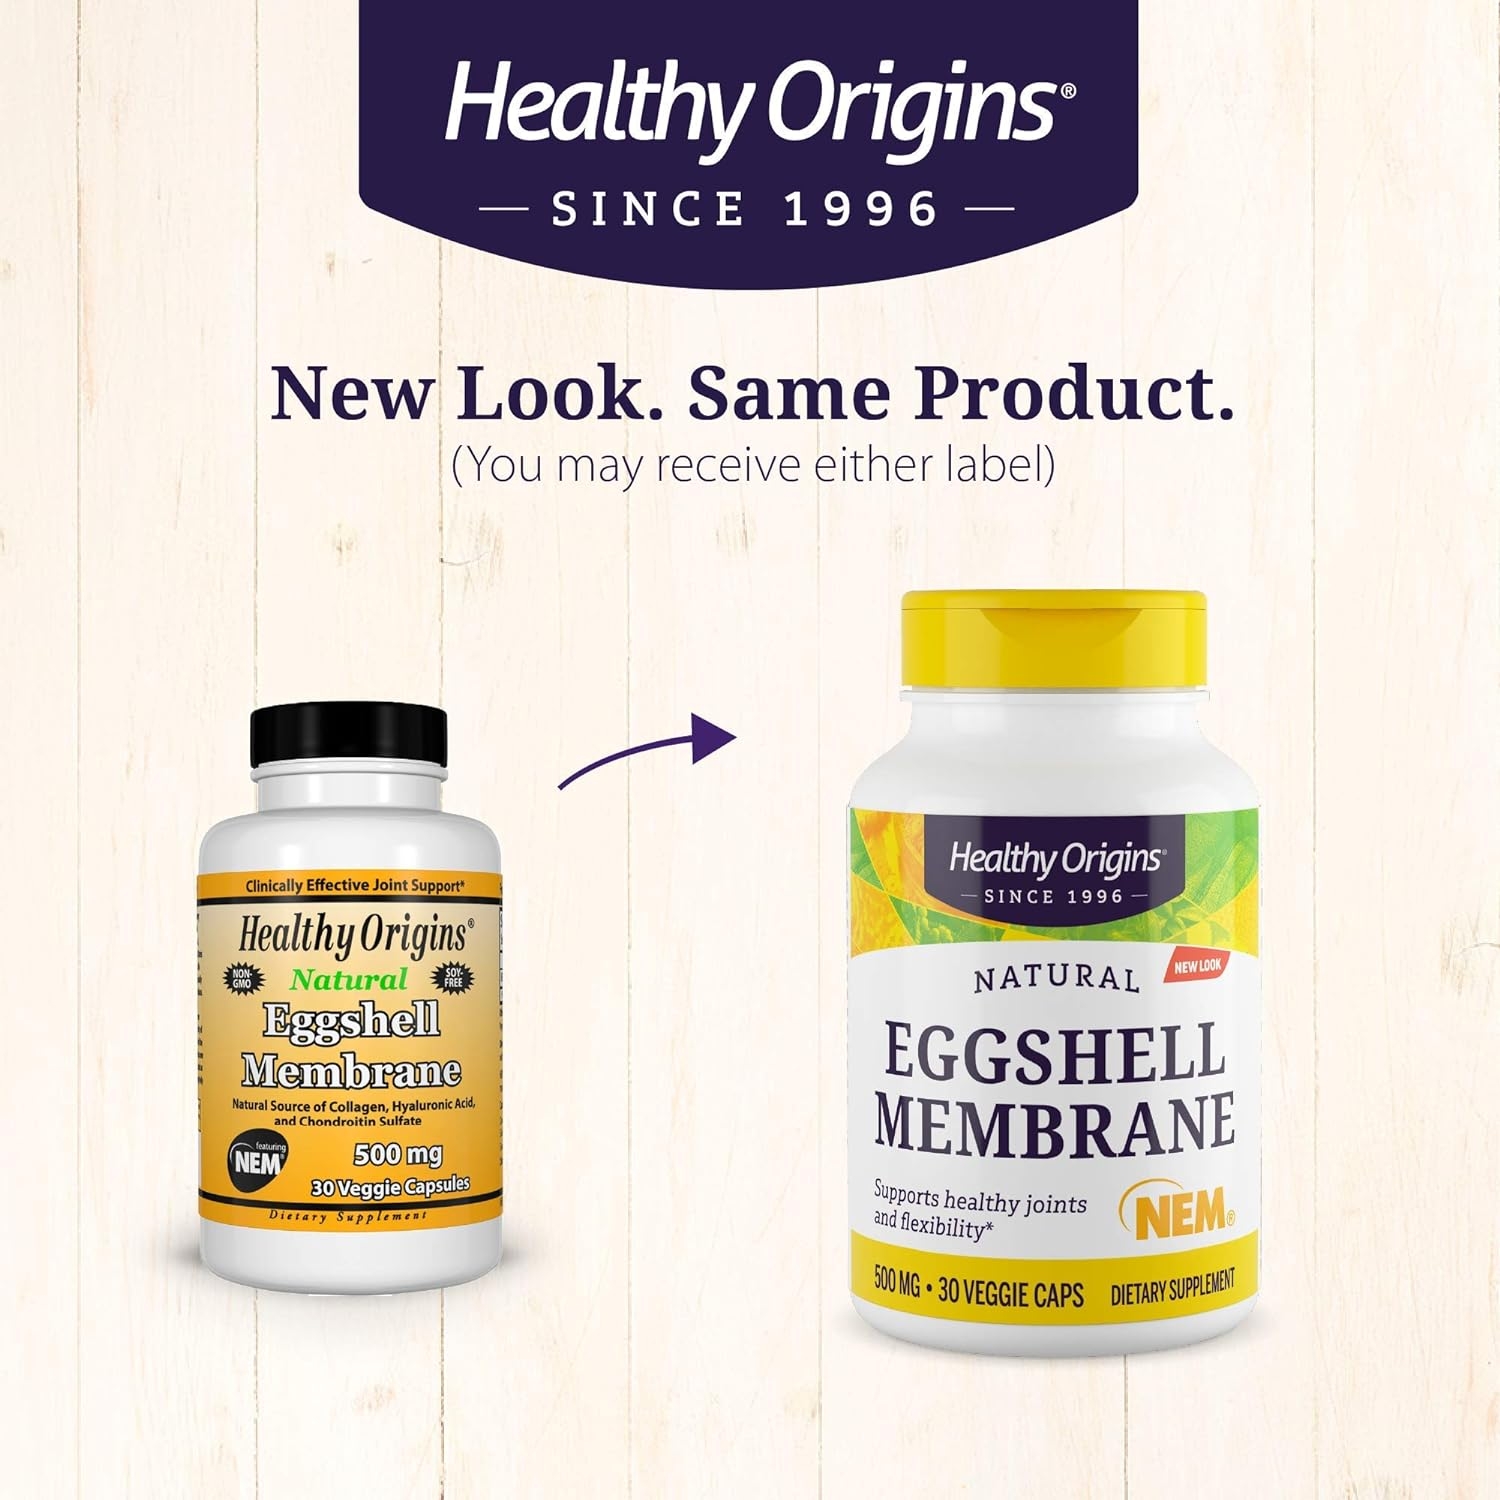 Healthy Origins Eggshell Membrane (NEM) 500 mg, 30 Veggie Caps